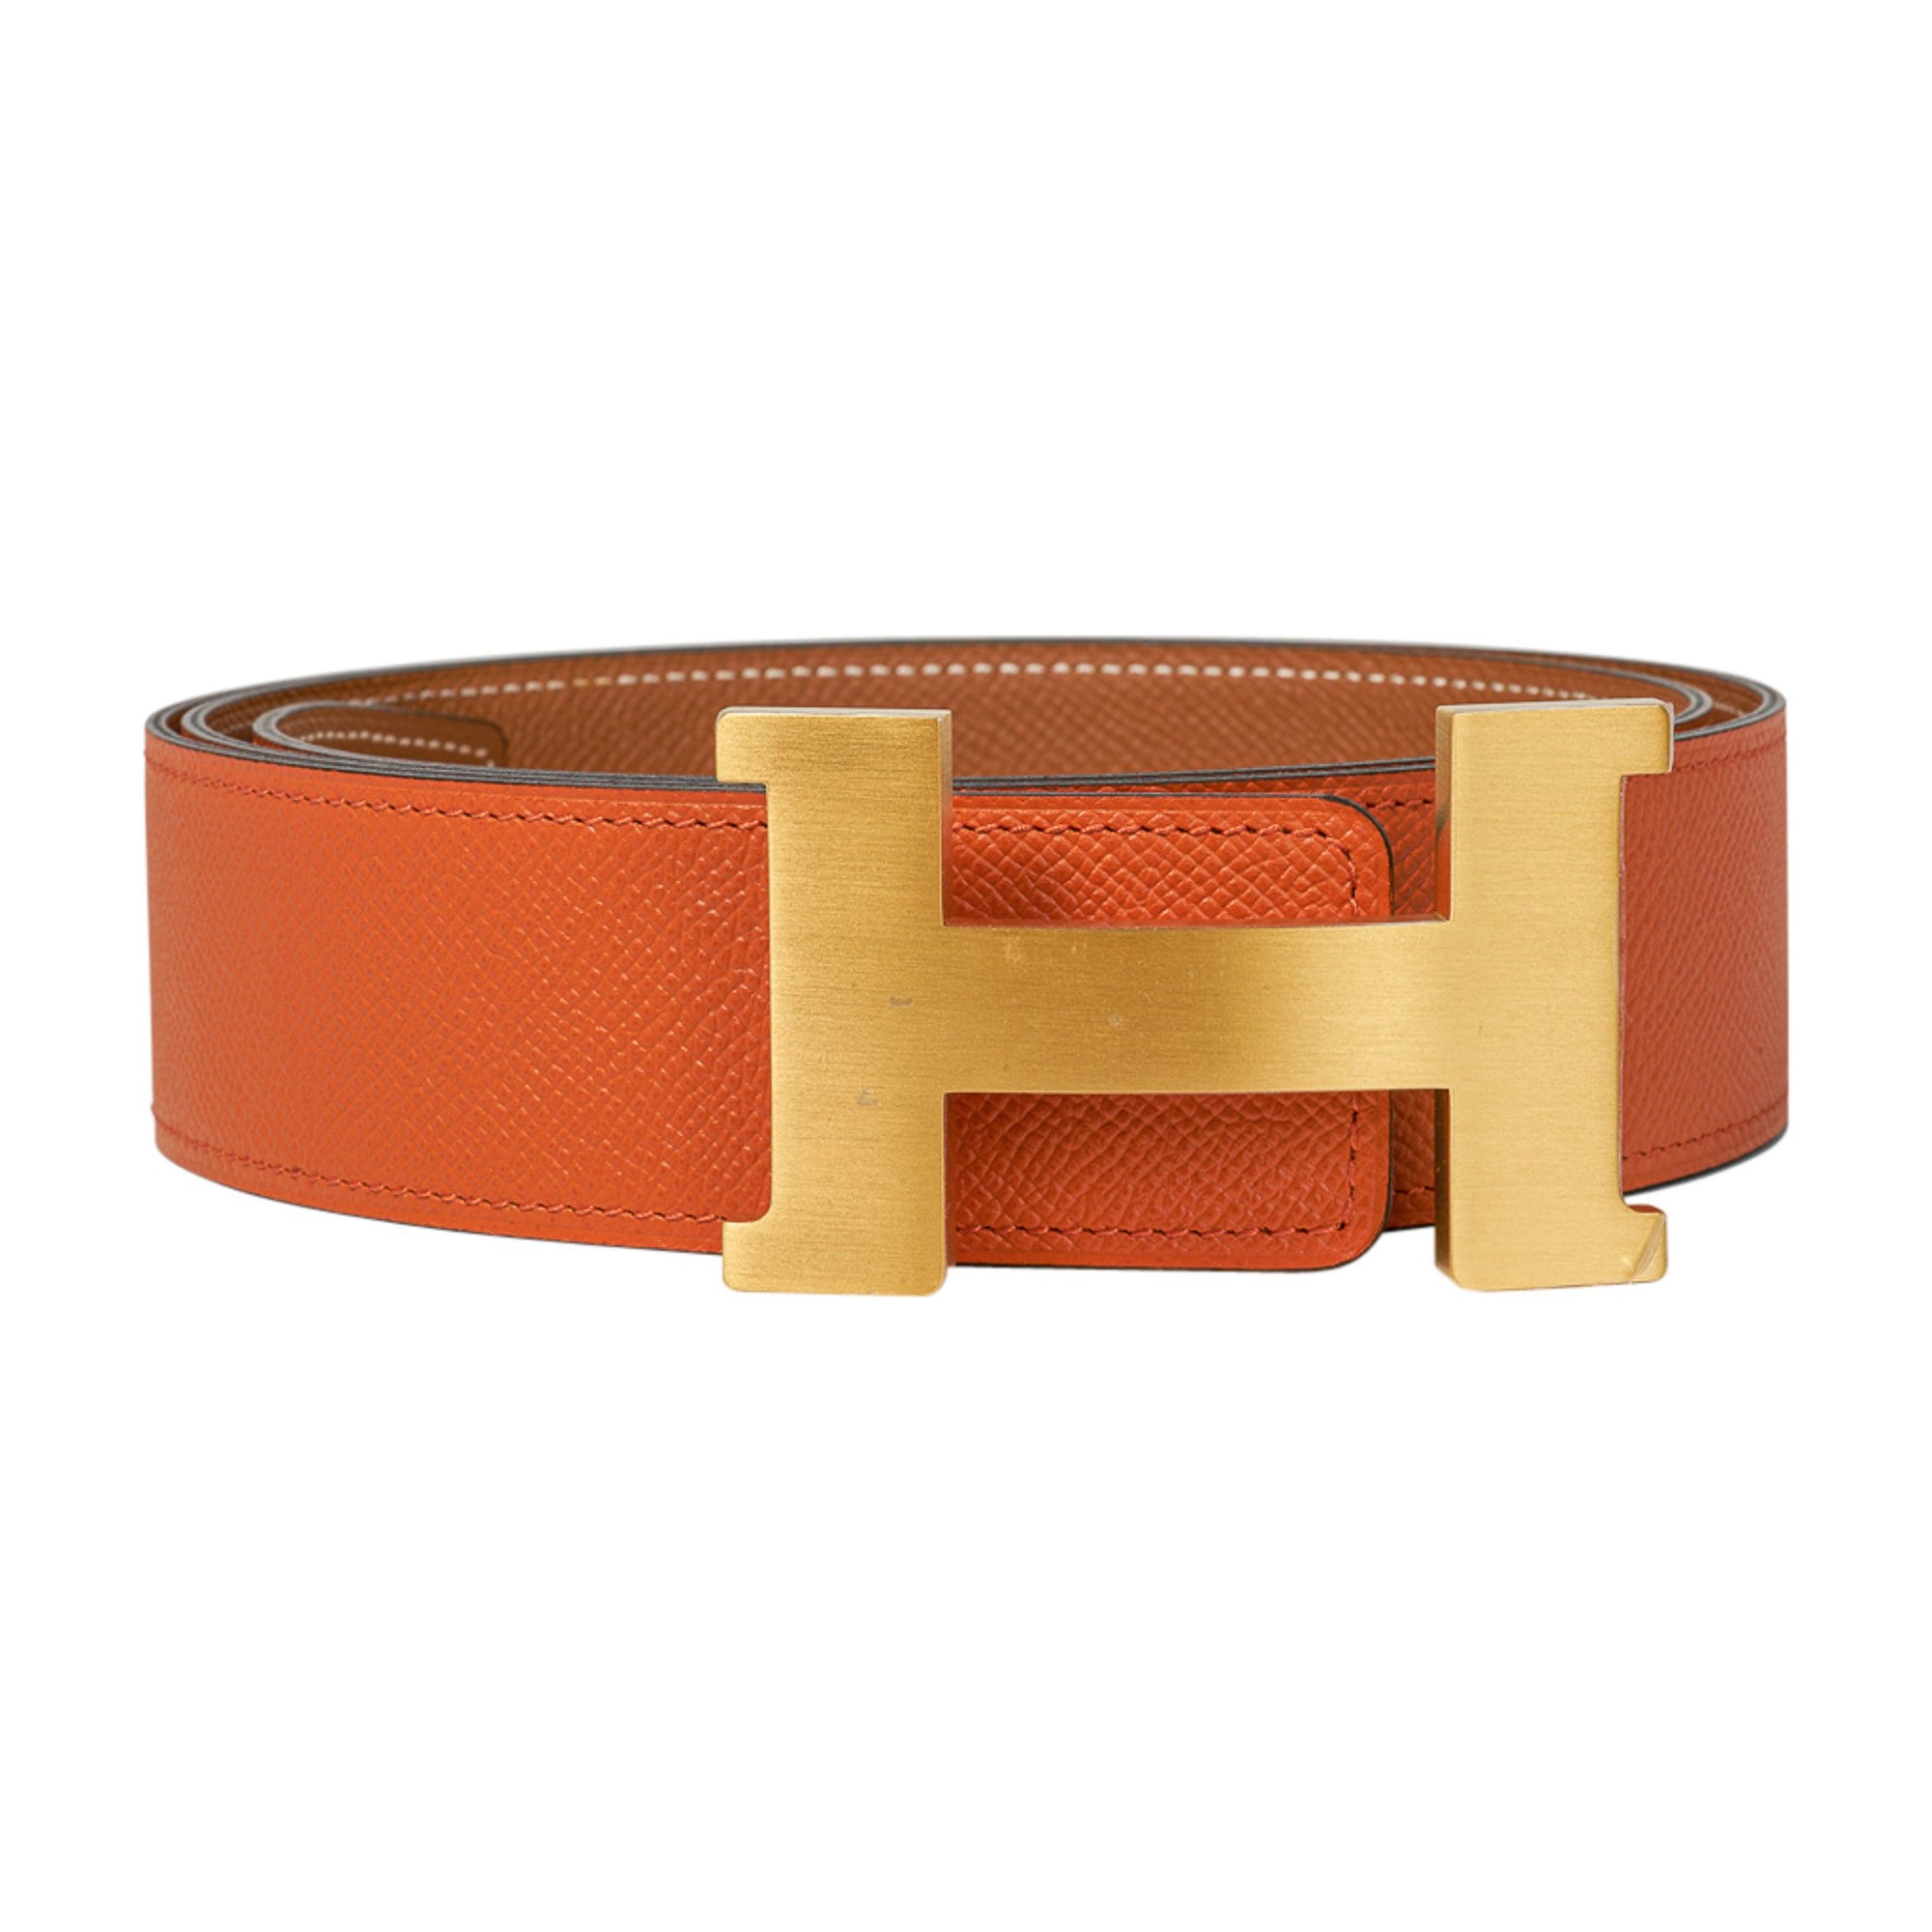 Leather belt Christian Louboutin Orange size 100 cm in Leather